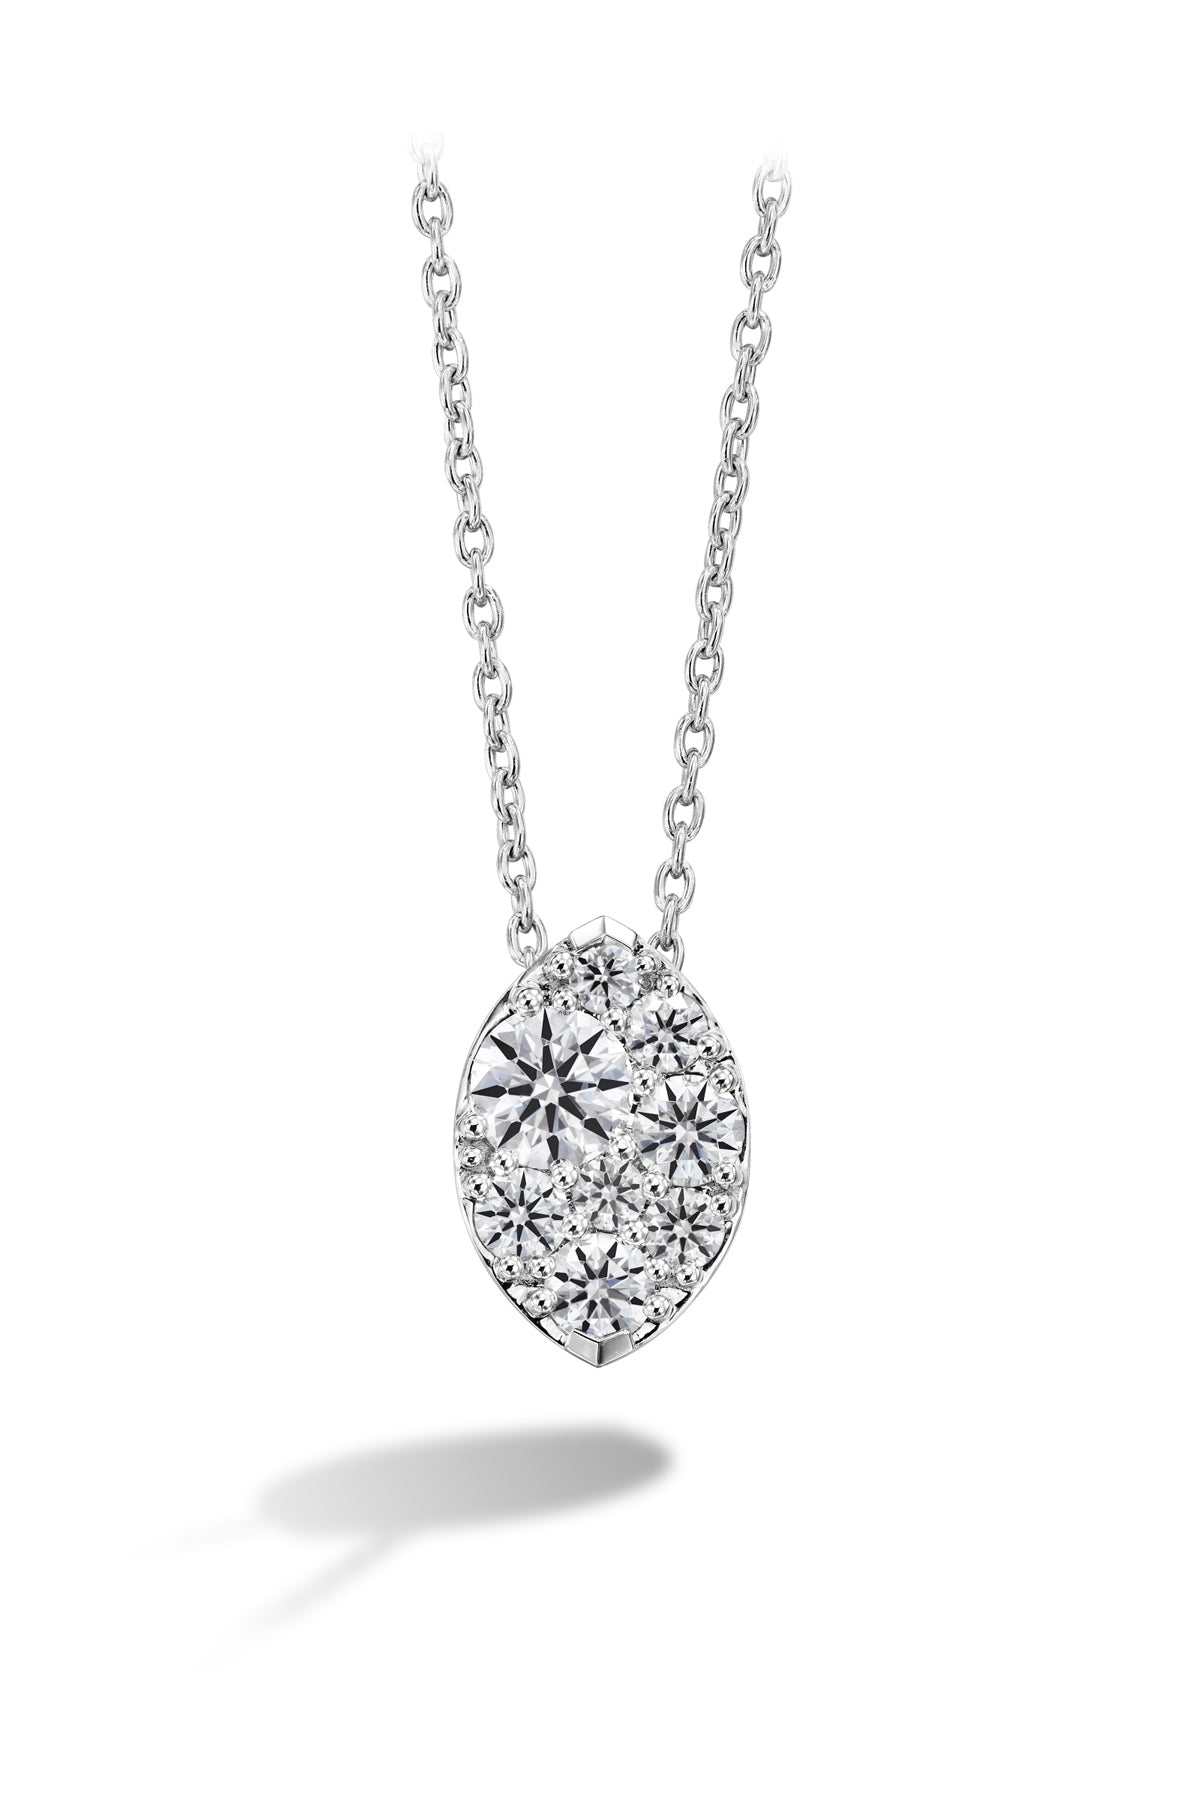 Tessa Diamond Navette Pendant From Hearts On Fire available at LeGassick Diamonds and Jewellery Gold Coast, Australia.